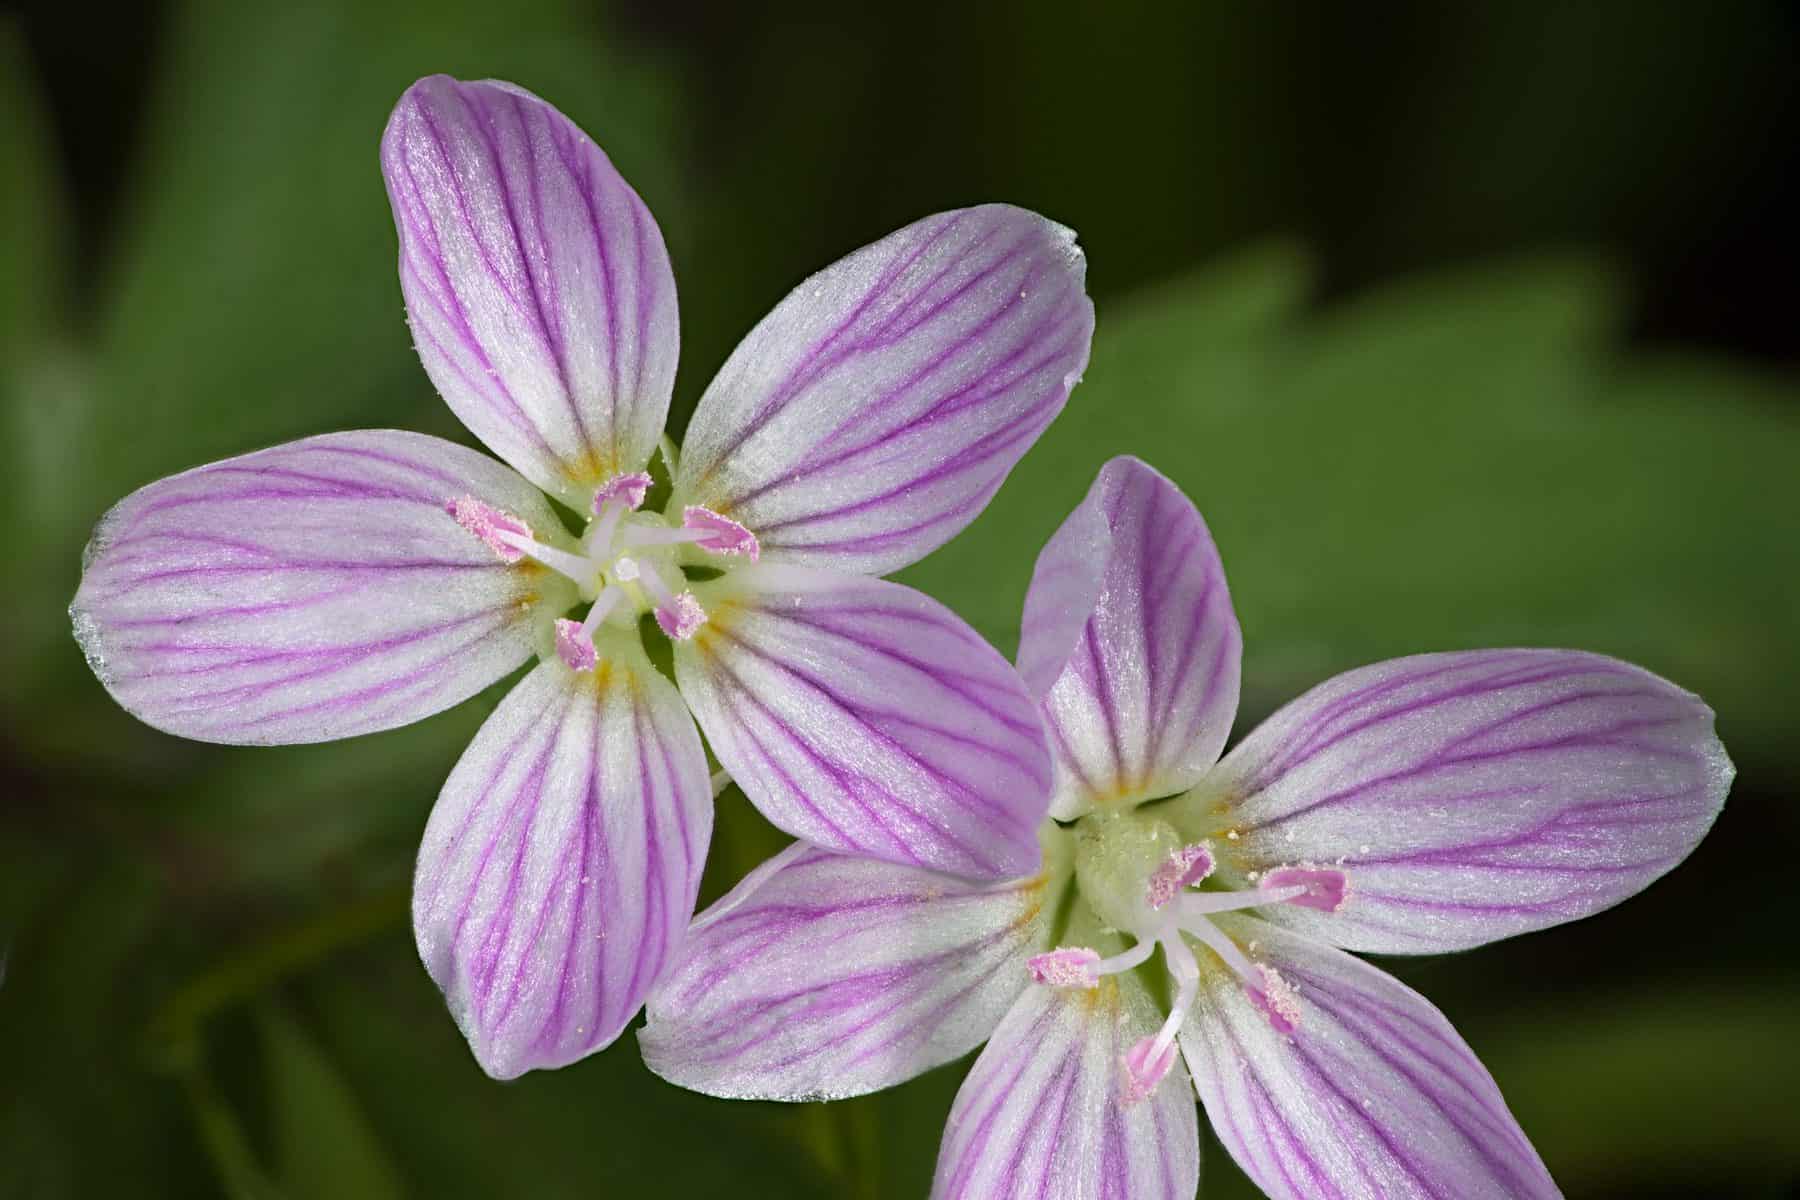 Virginia Spring Beauty (Photo: Craig Blacklock)